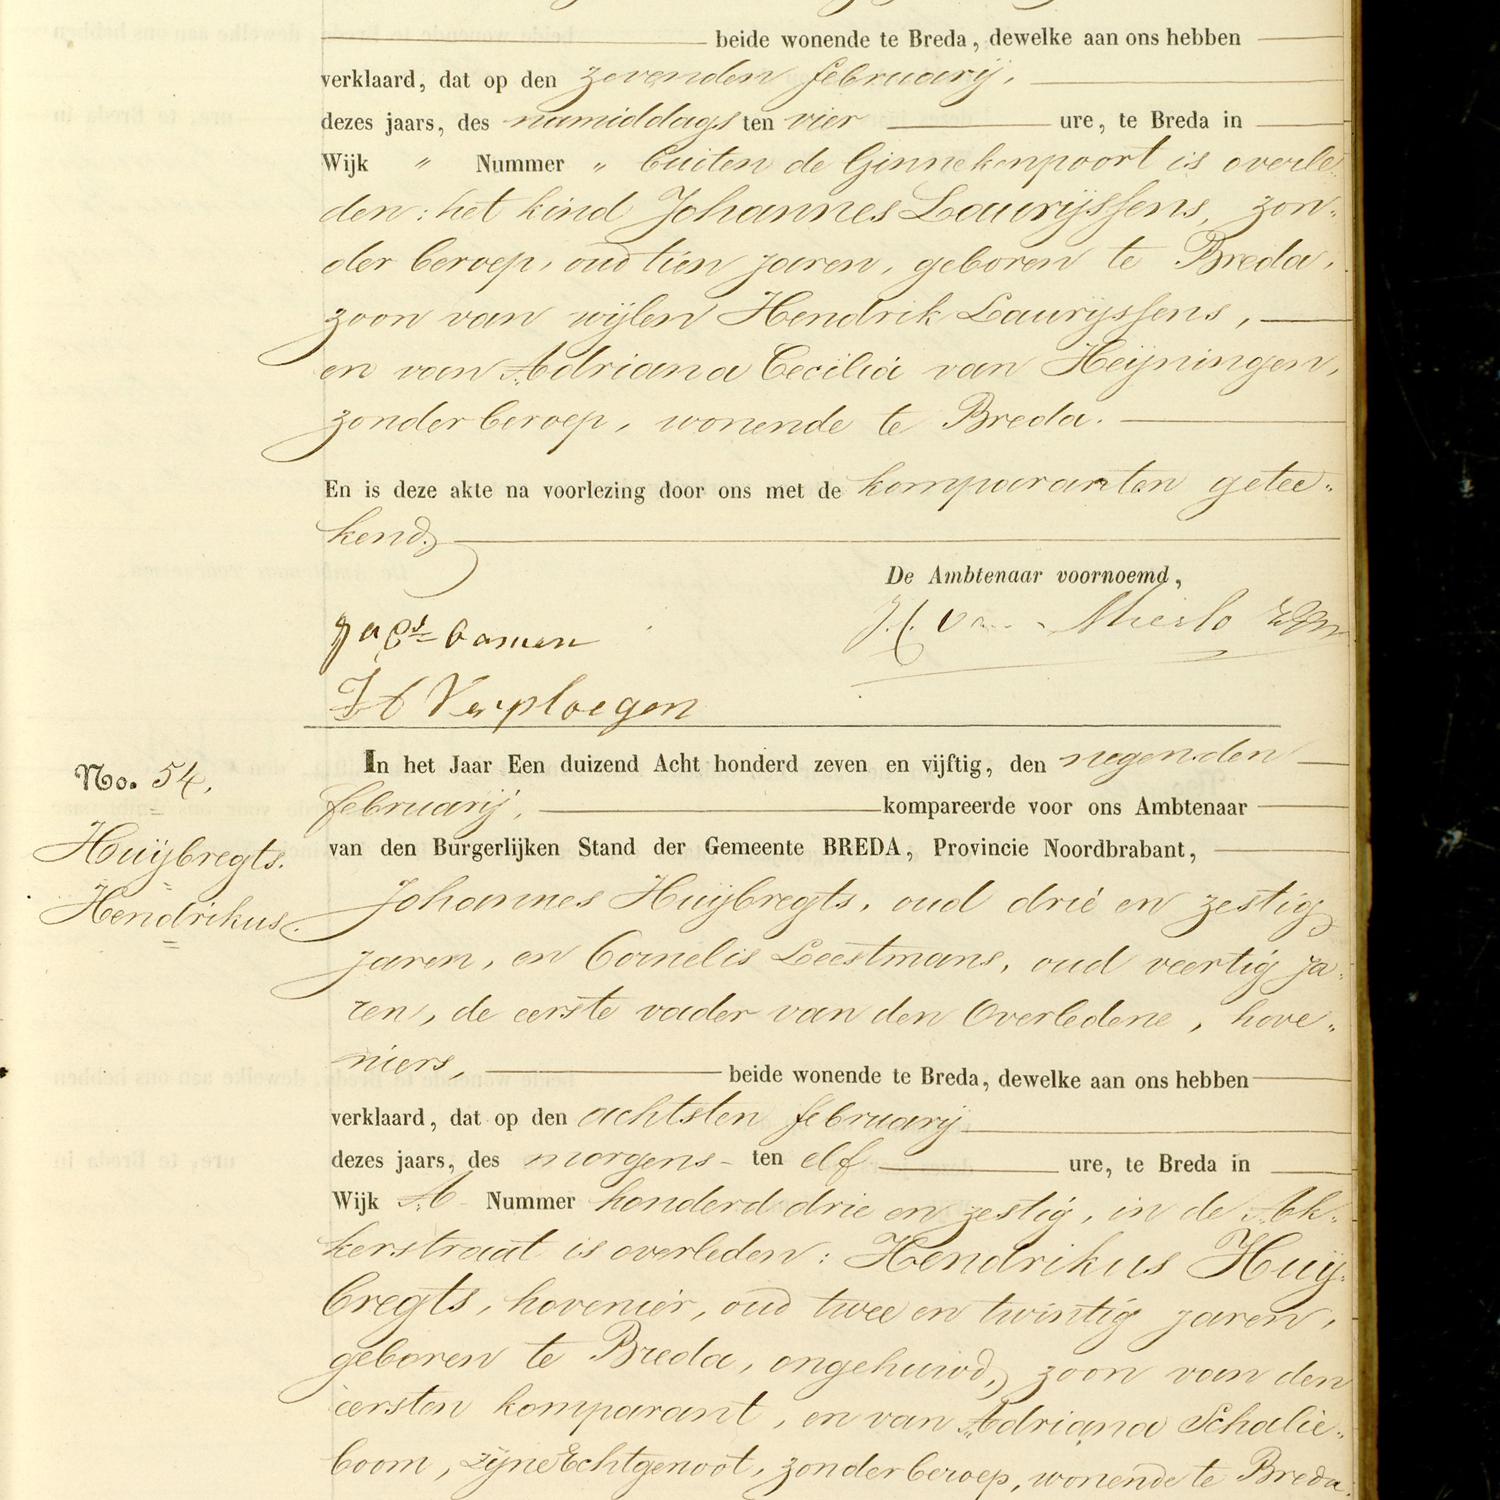 Civil registry of deaths, Breda, 1857, records 53-54